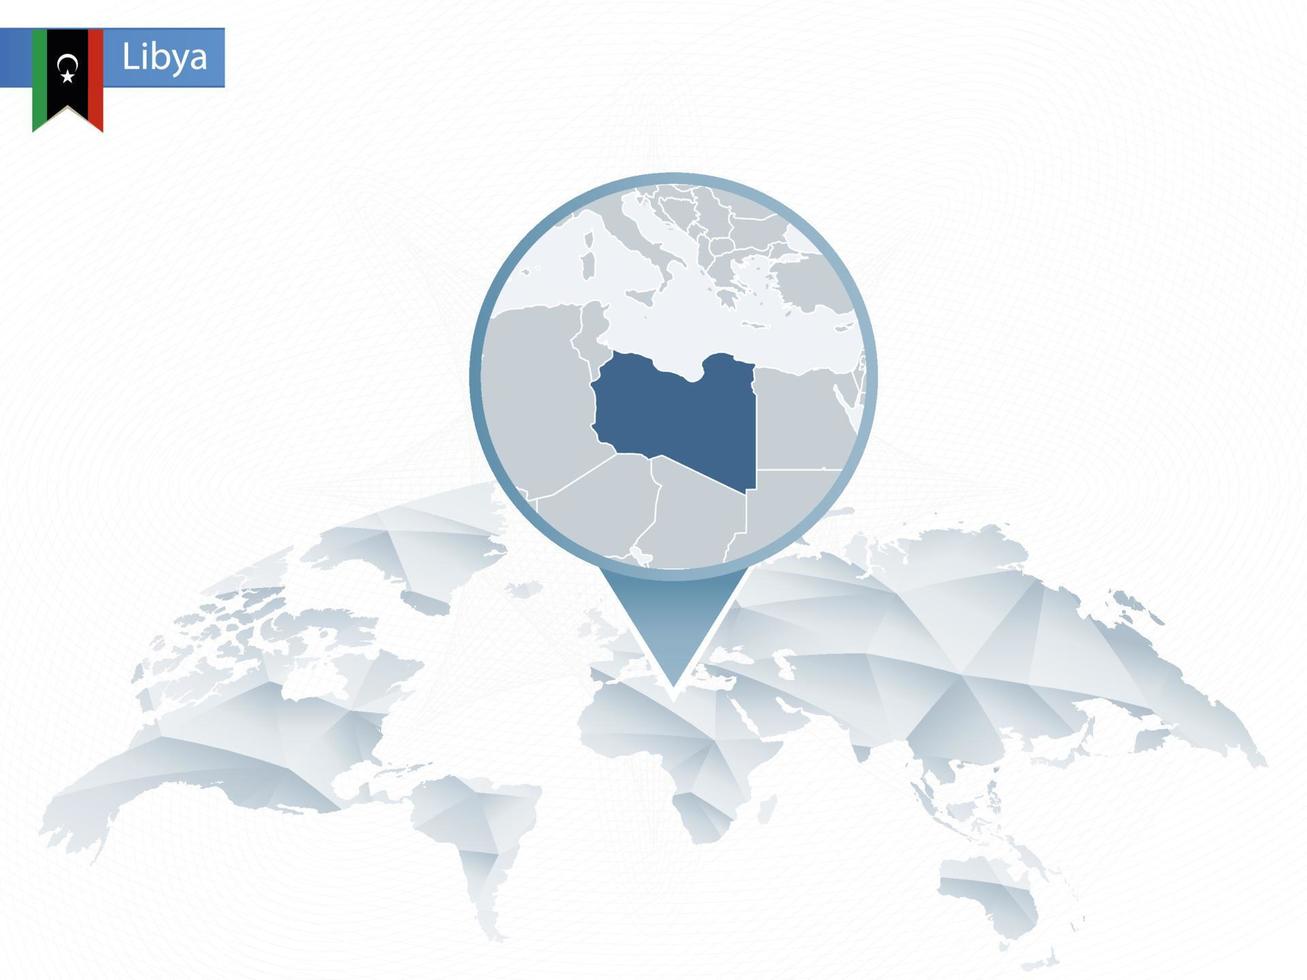 abstrakte abgerundete Weltkarte mit festgesteckter detaillierter Libyen-Karte. vektor